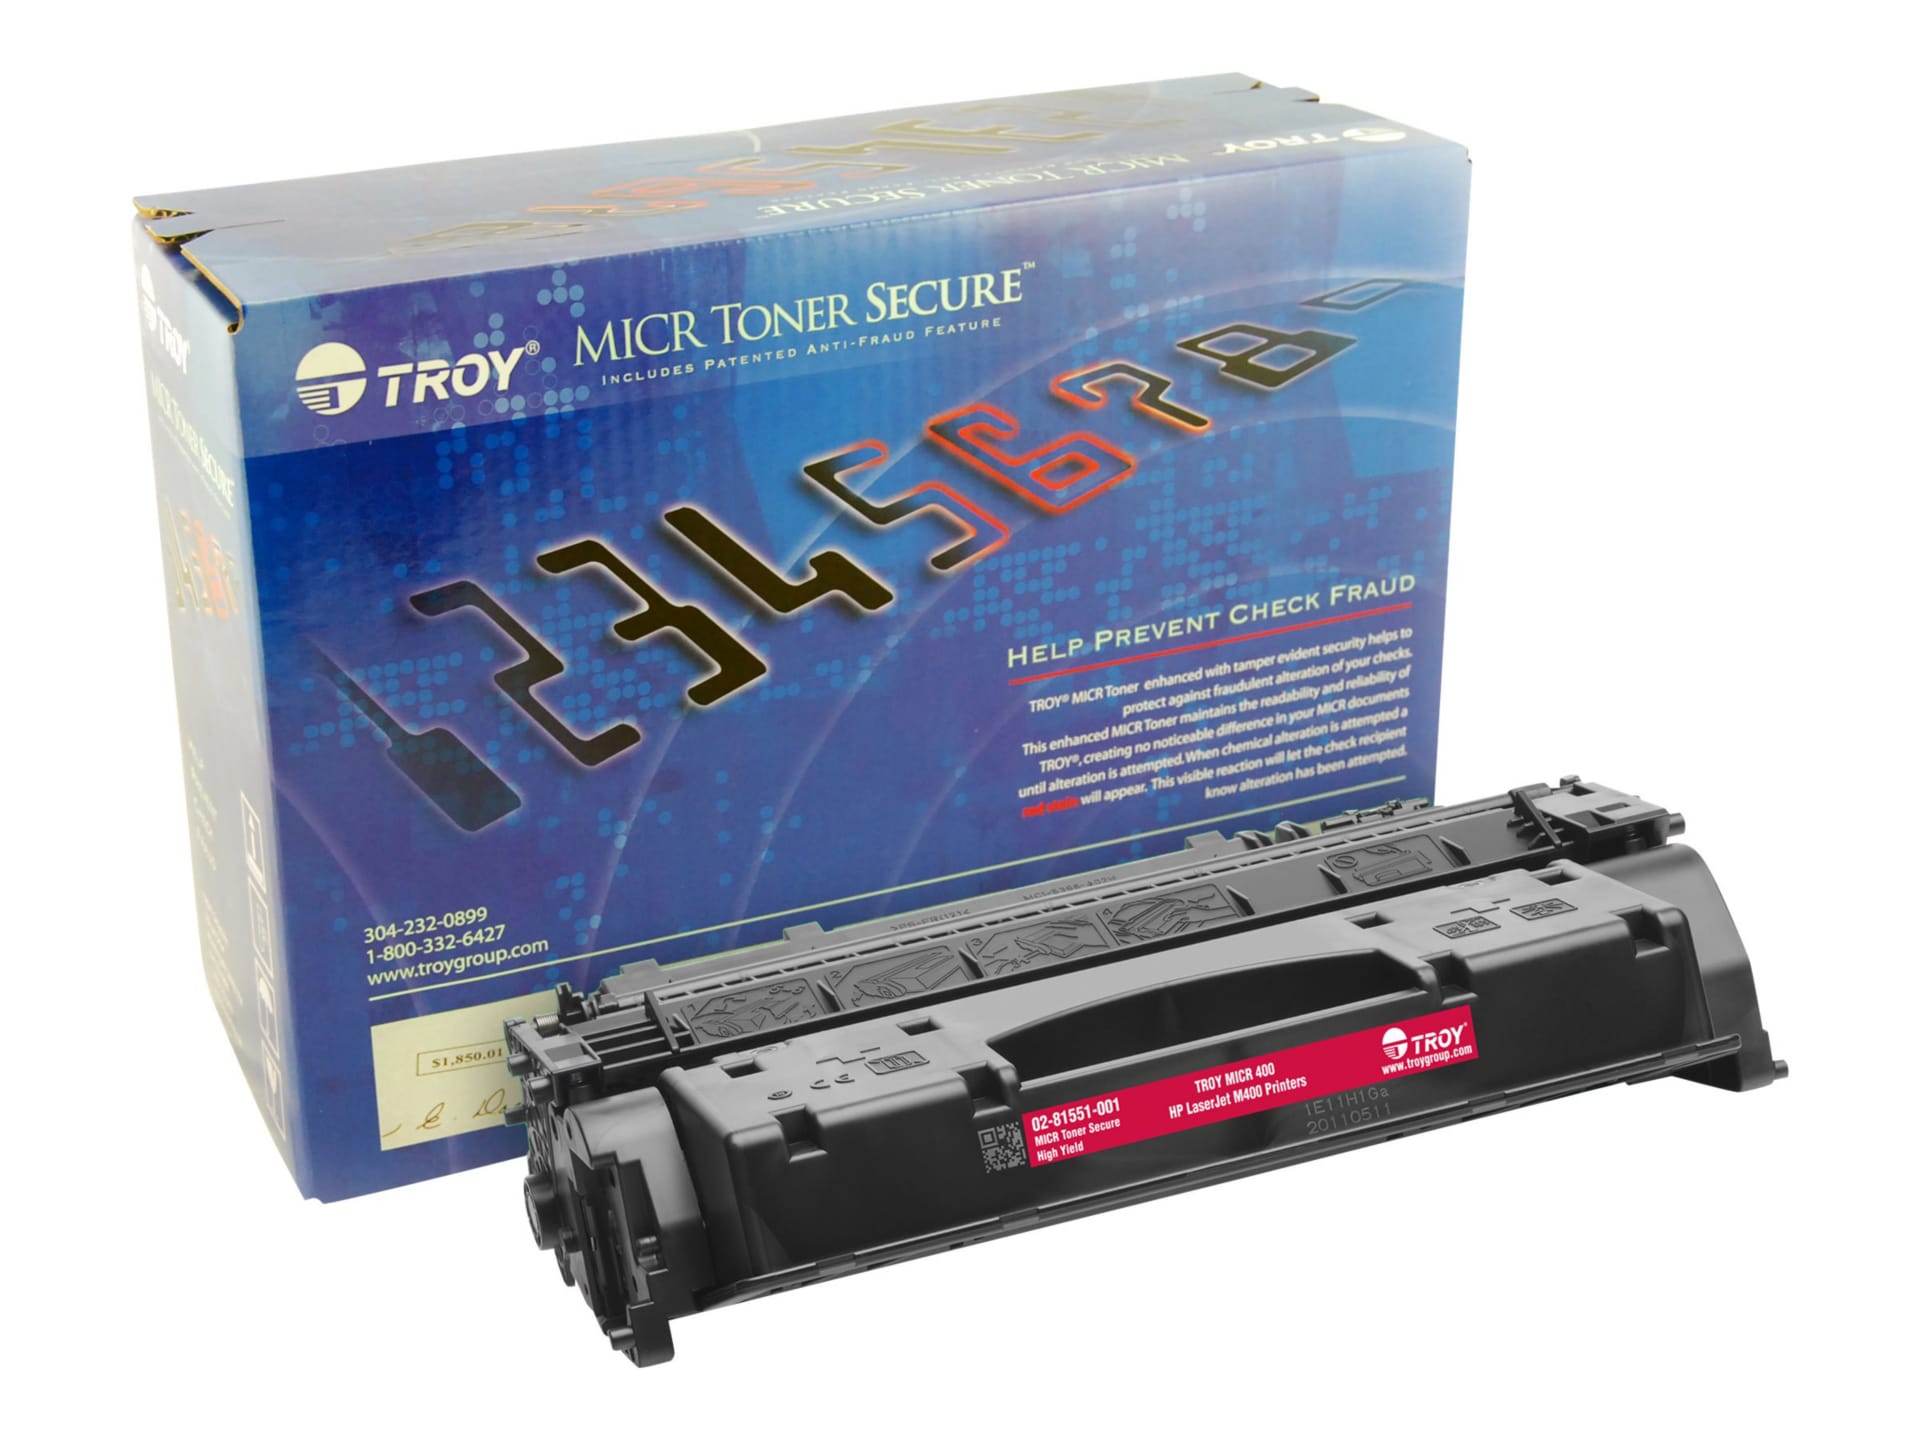 TROY MICR Toner Secure M401/M425MFP - High Yield - black - compatible - MICR toner cartridge (alternative for: HP